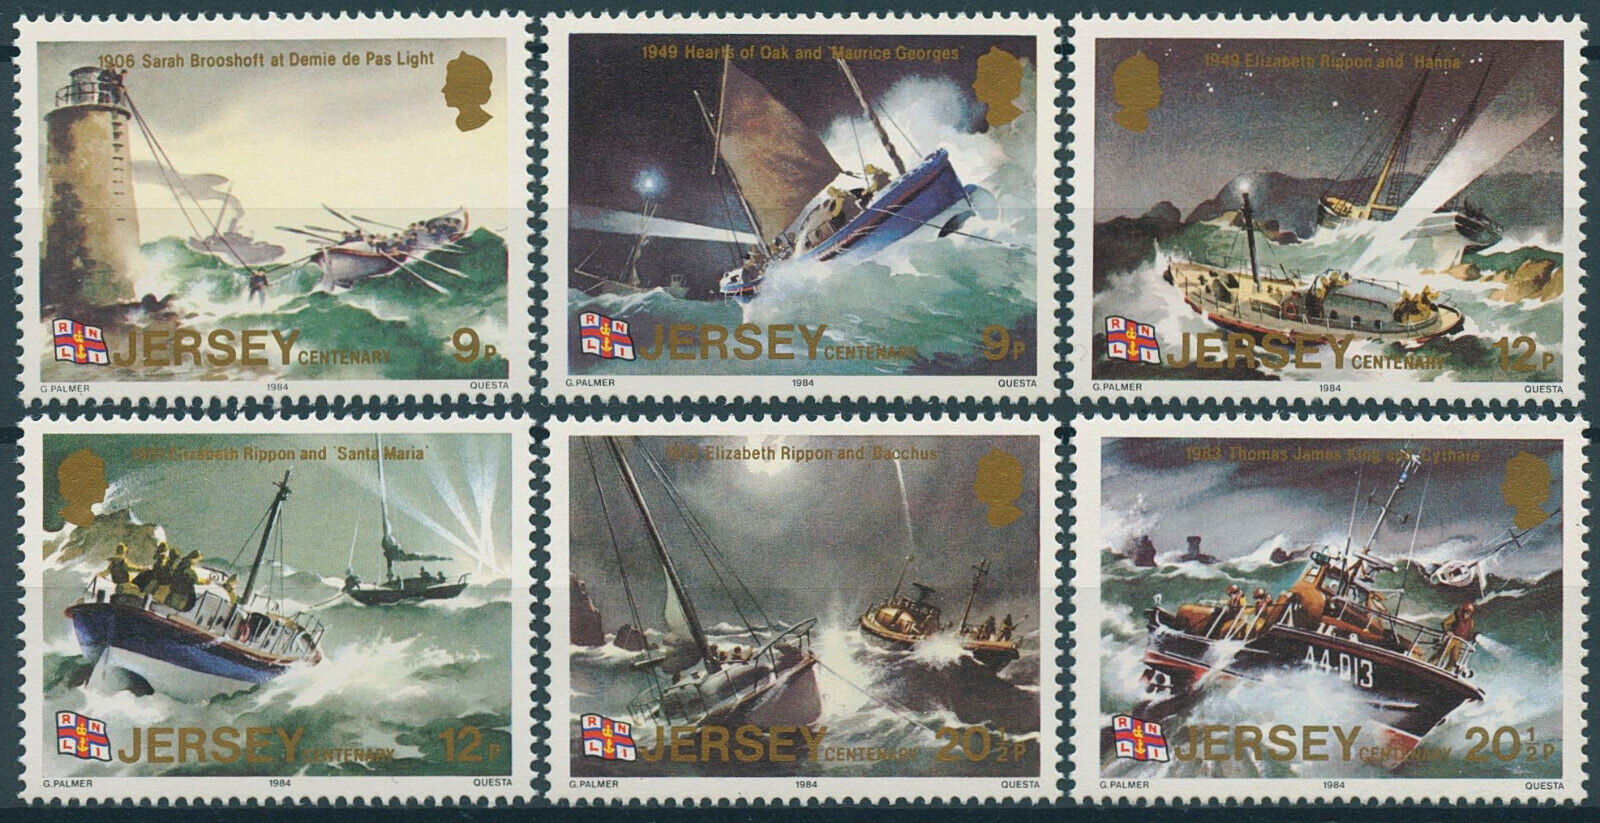 Jersey 1984 MNH Ships Stamps Jersey RNLI Lifeboat Station Nautical 6v Set